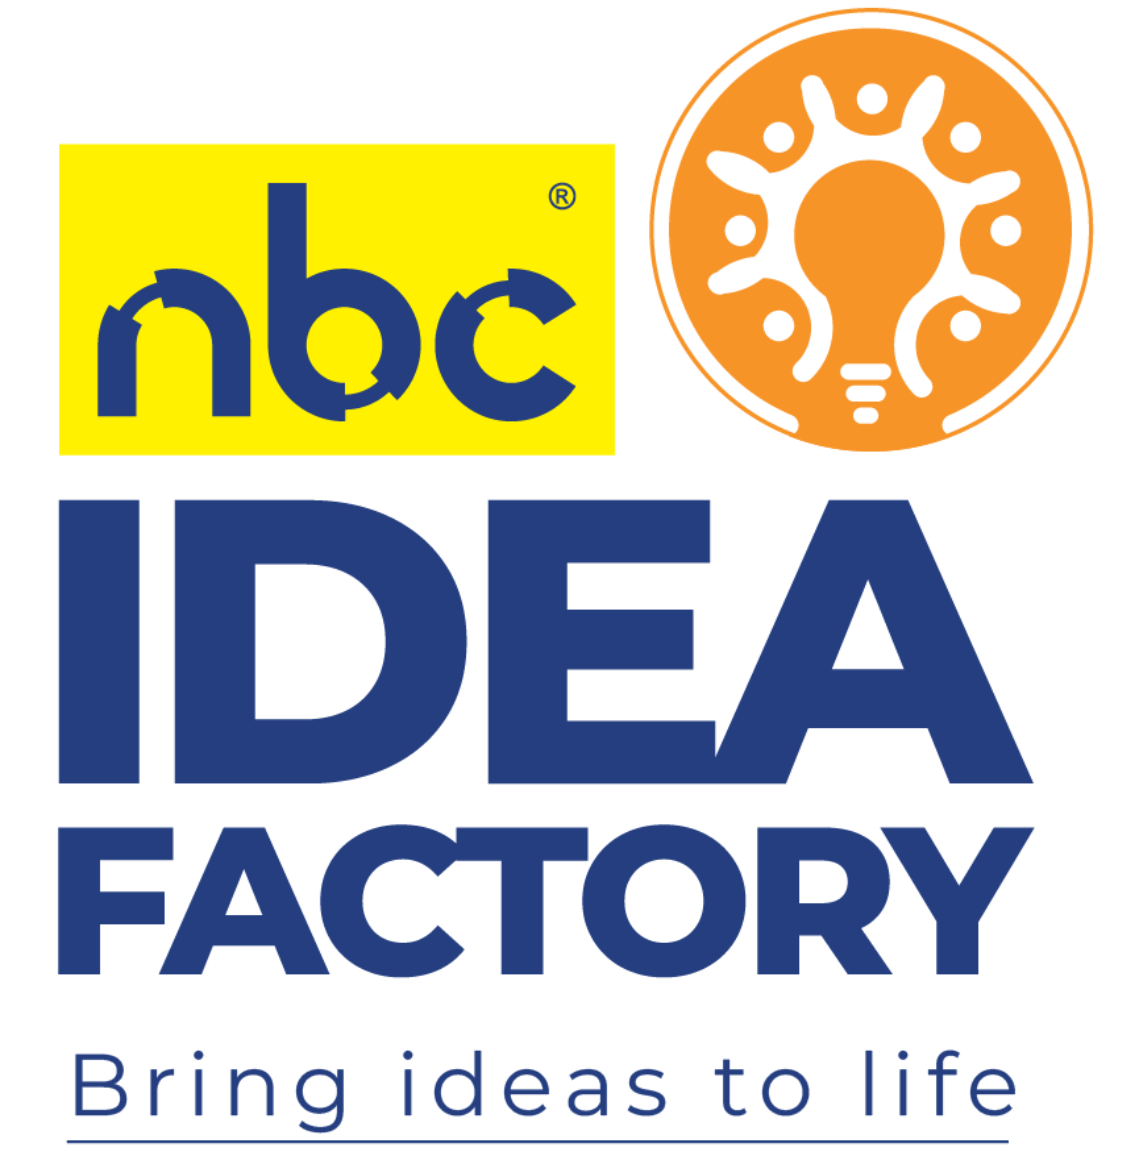 NIE Idea Factory